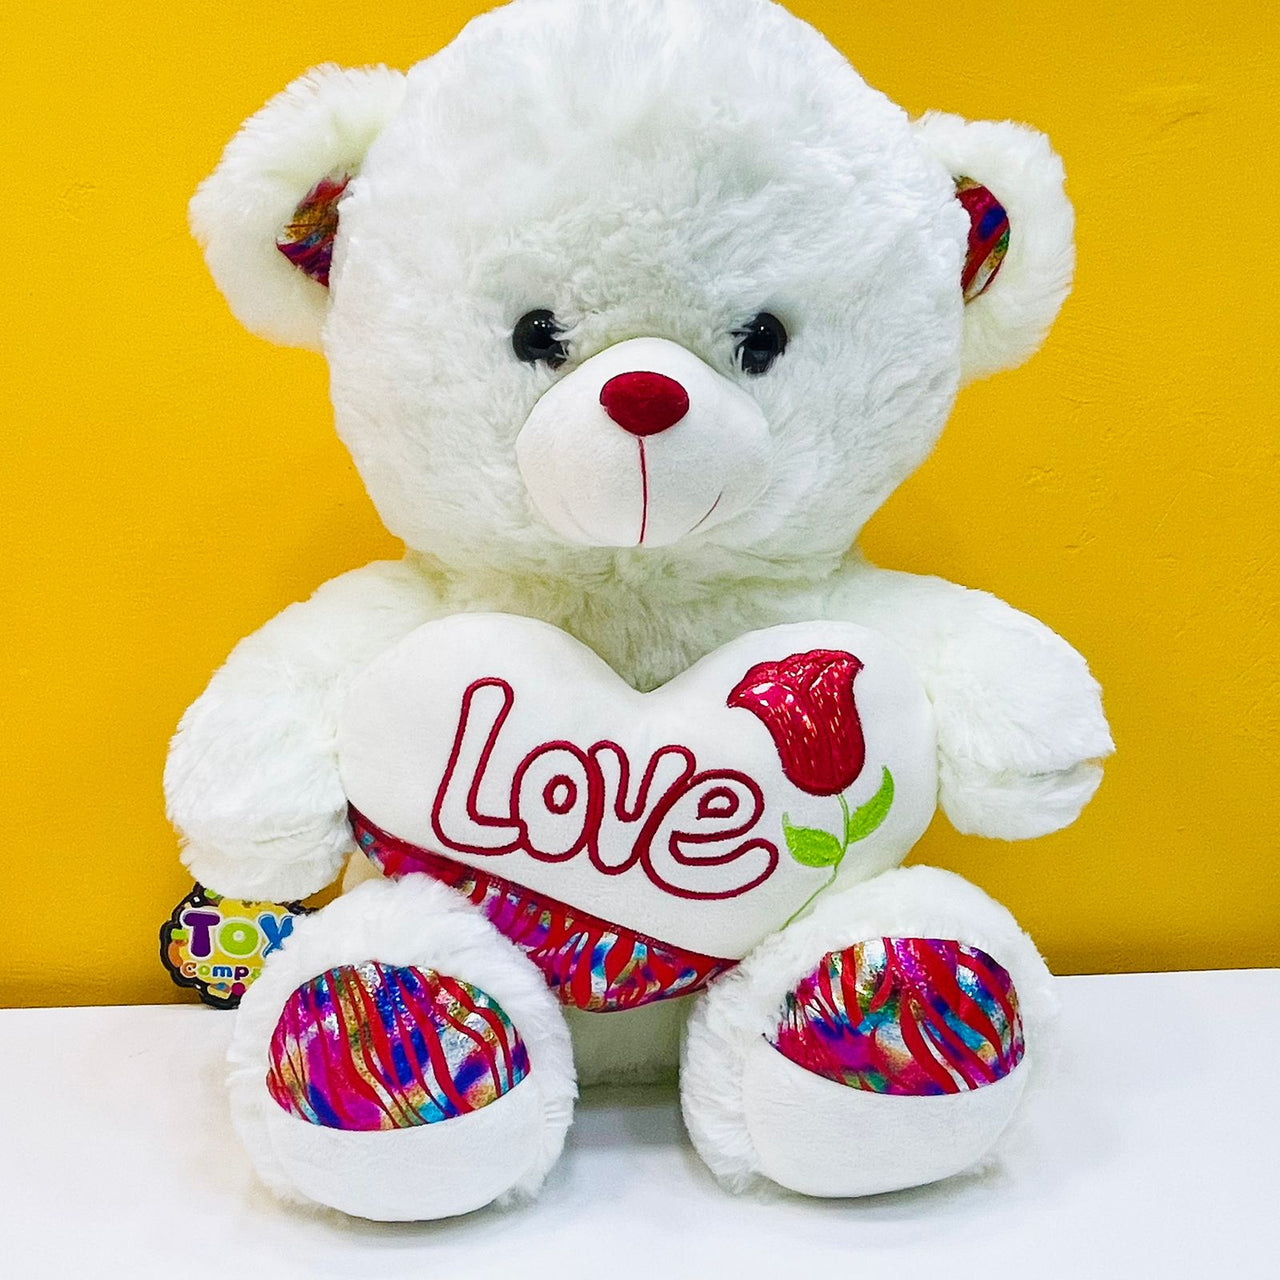 16* Inches Lovely Stuff Teddy Bear